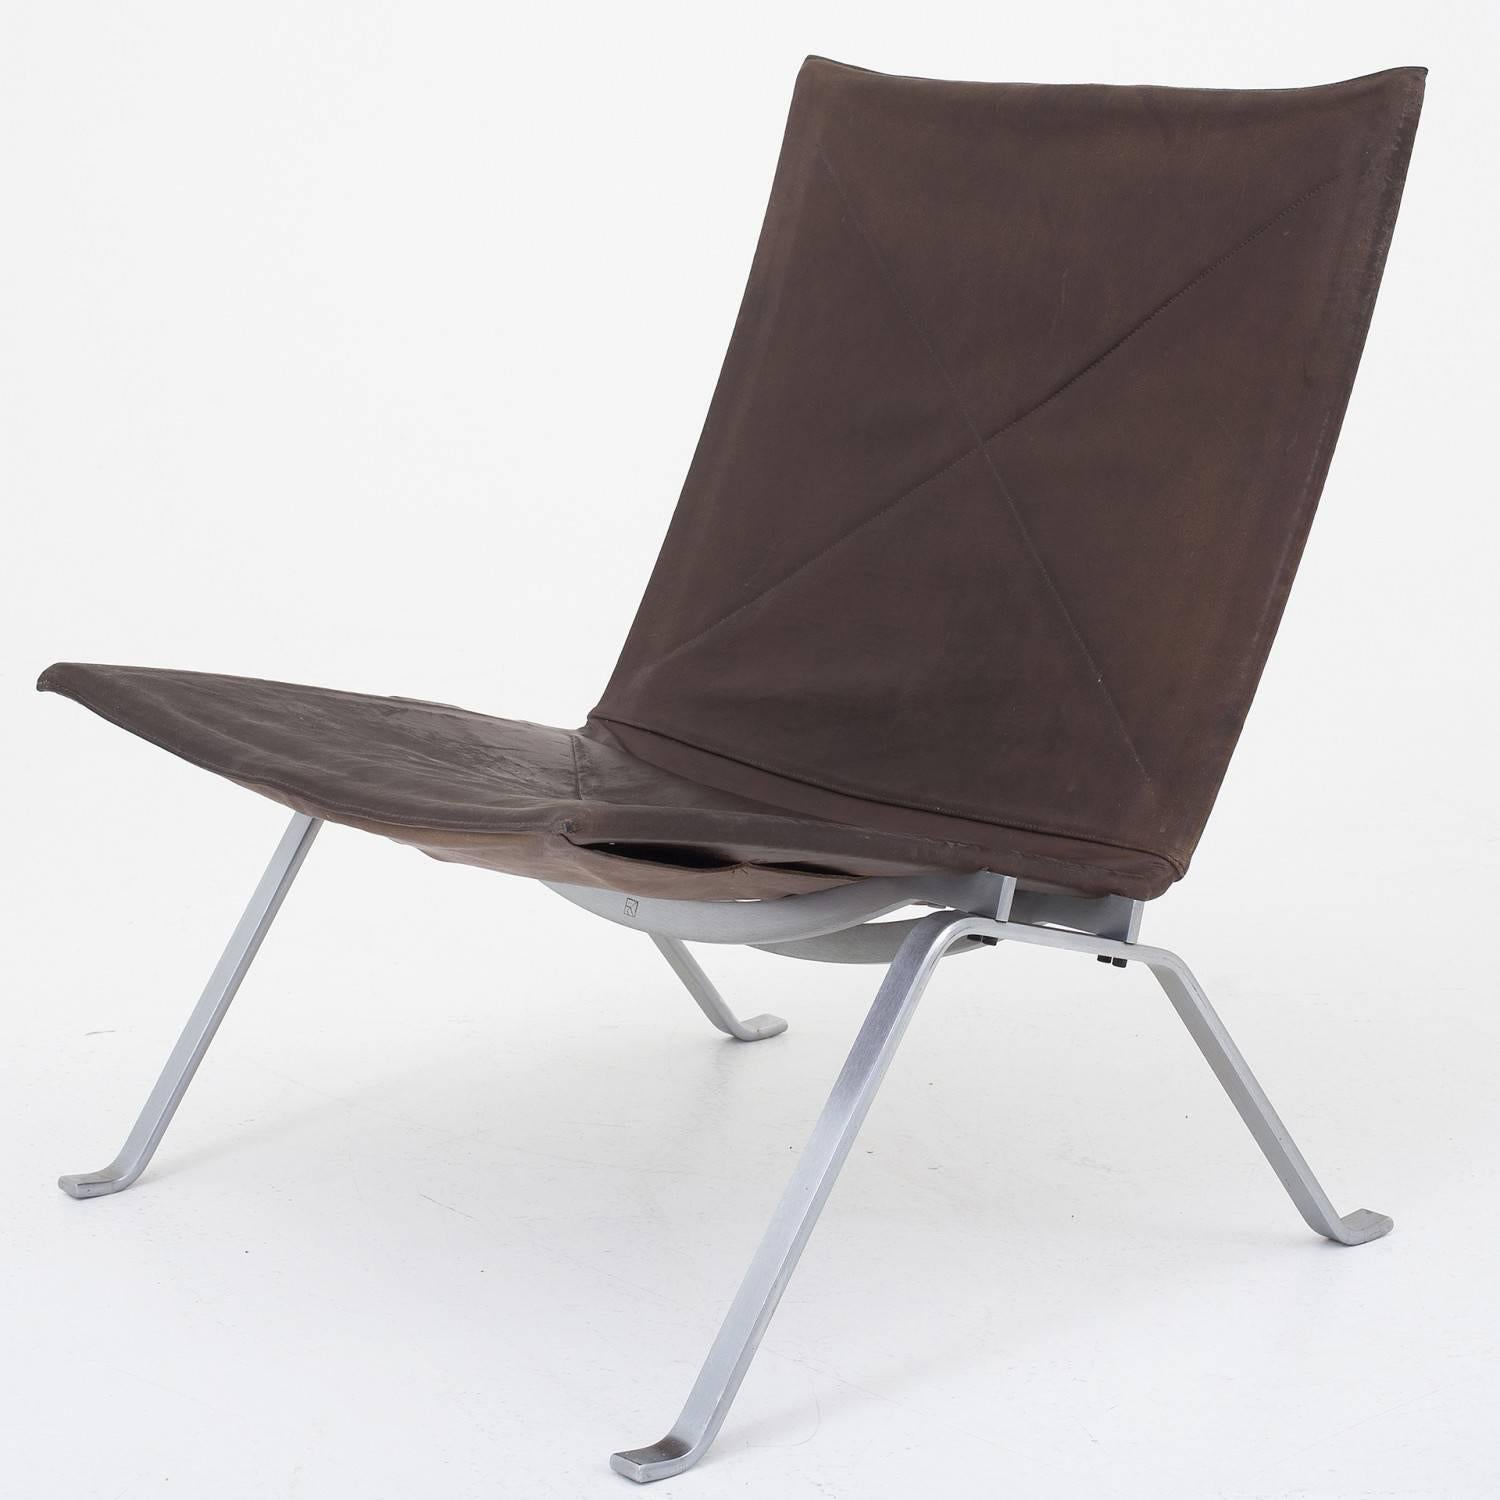 PK 22 easy chair in patinated original brown leather, frame in steel. Designed by Poul Kjærholm. Maker E. Kold Christensen.